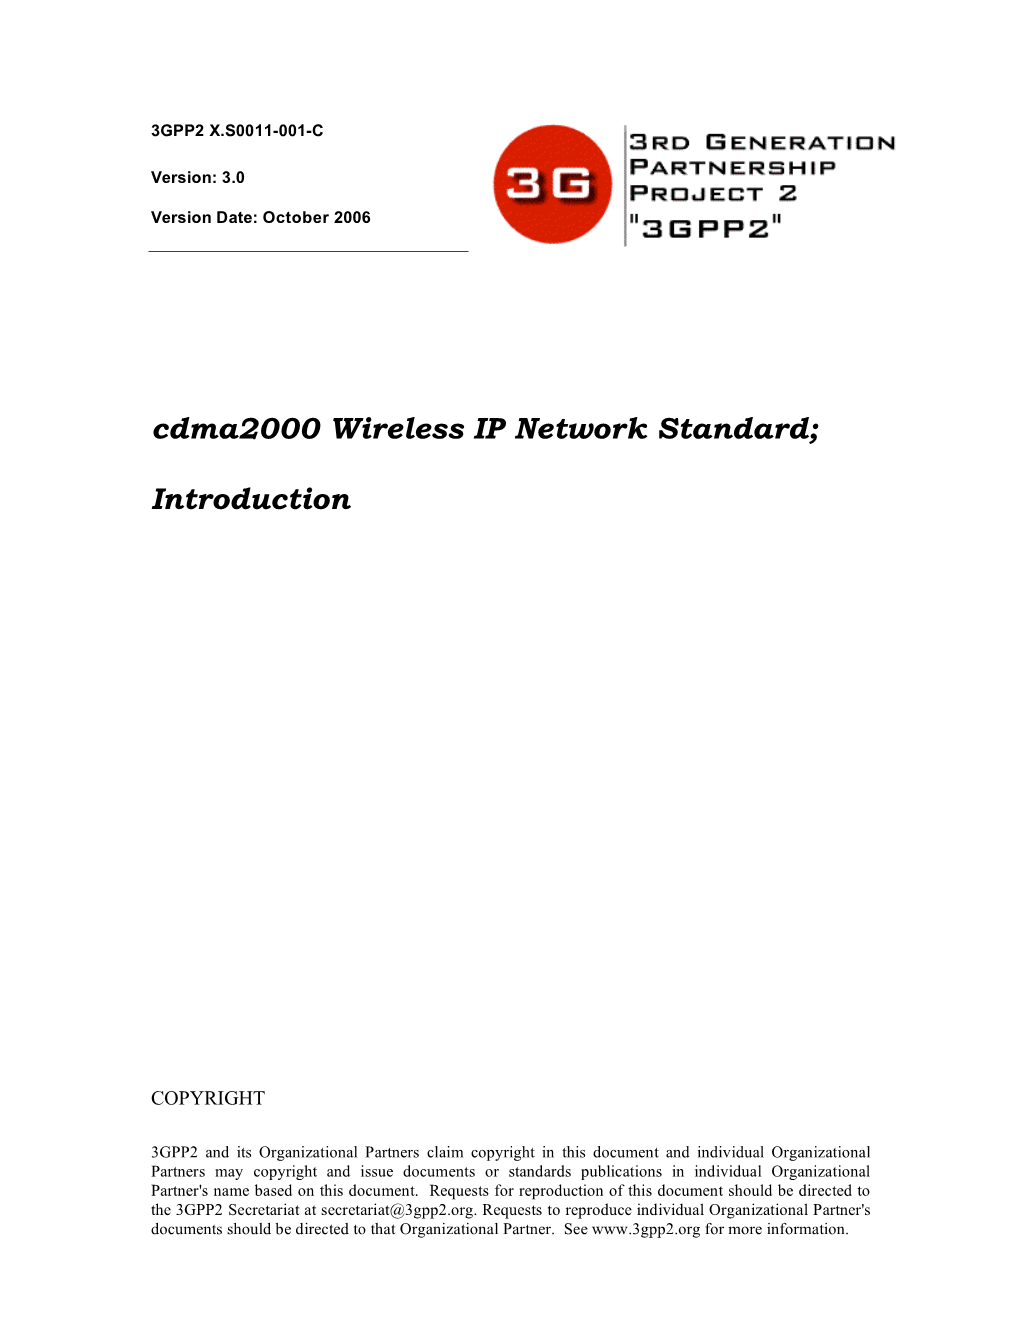 Cdma2000 Wireless IP Network Standard;